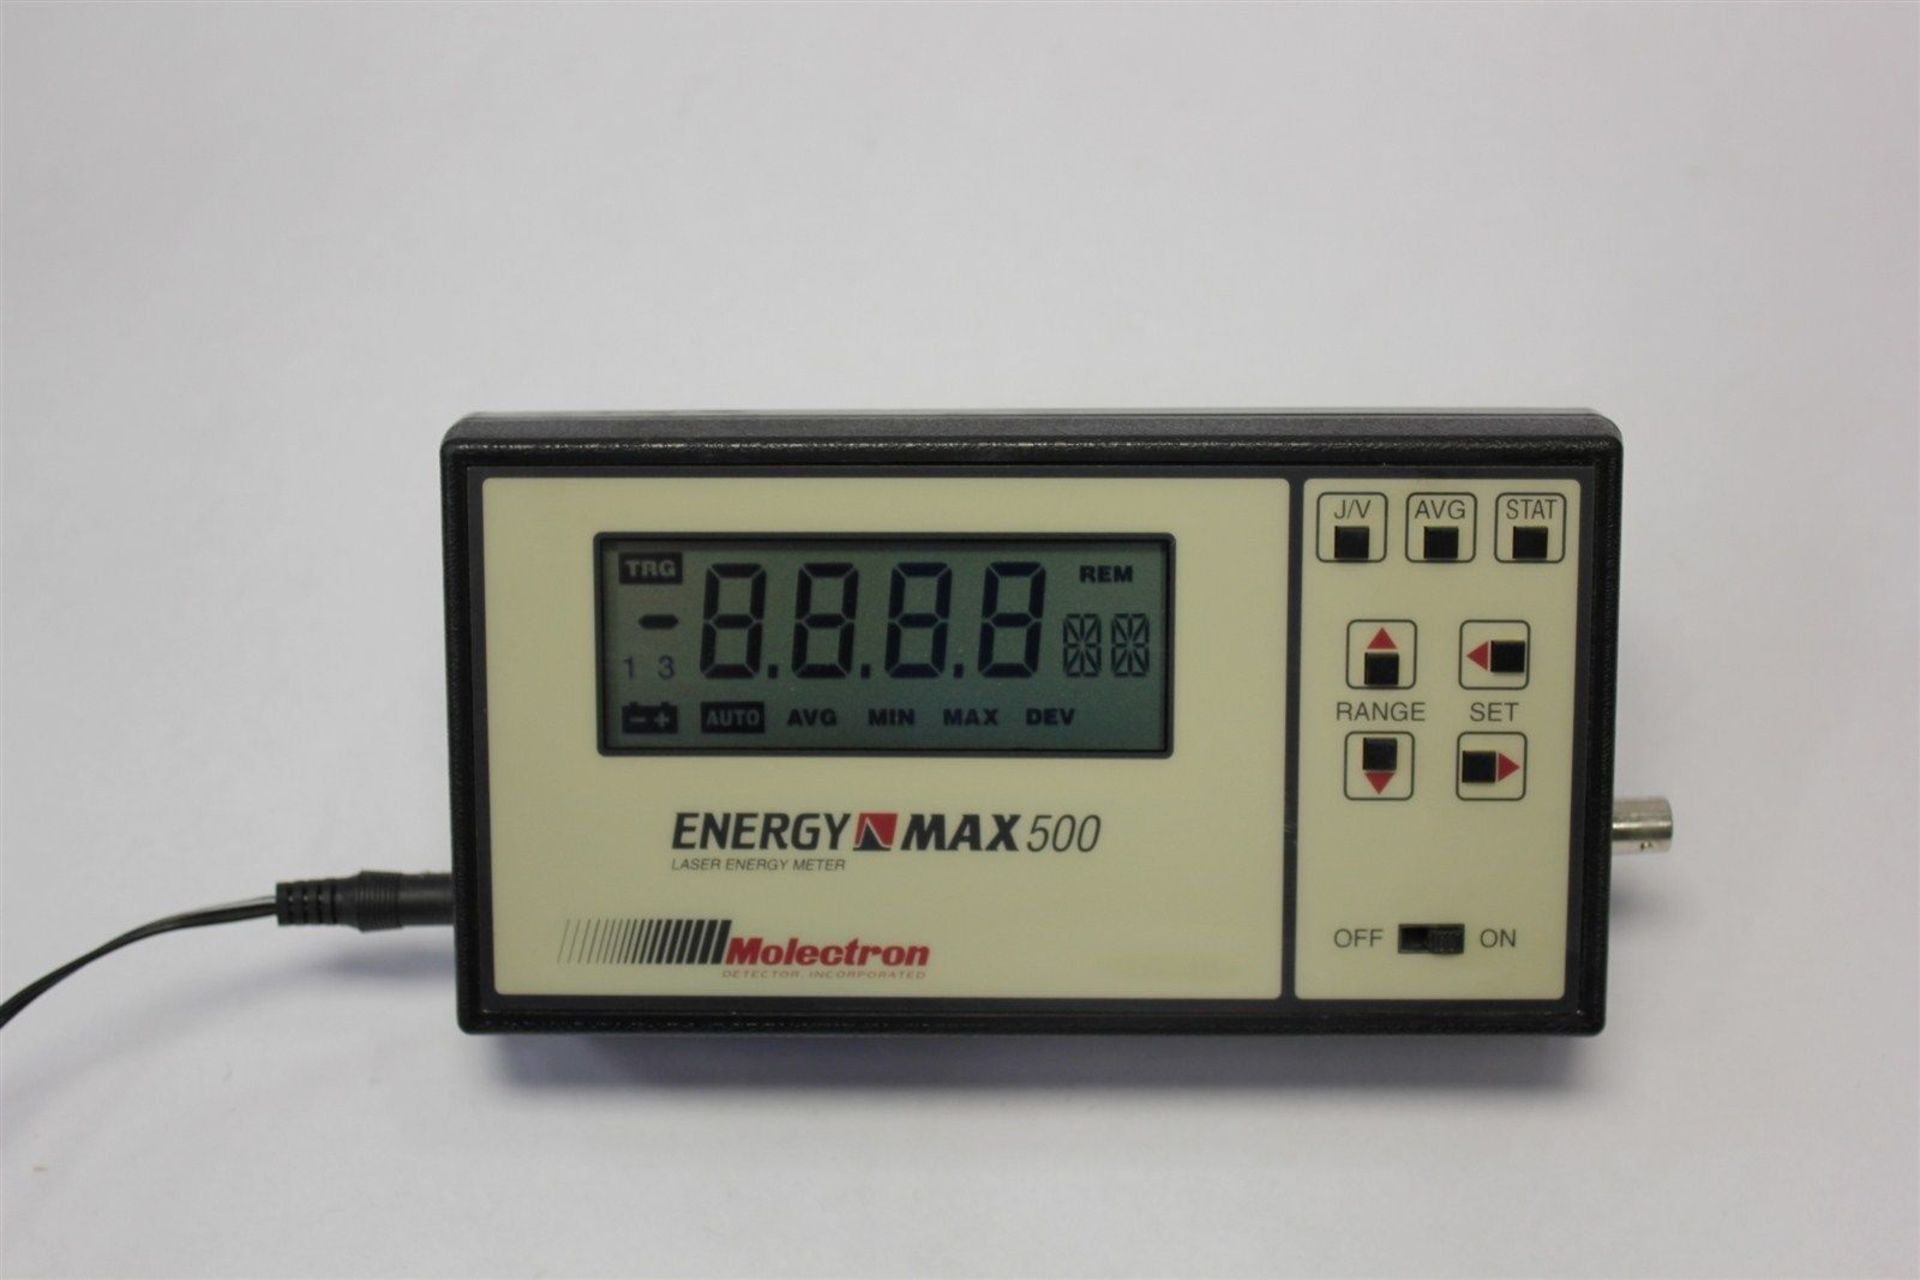 Molectron Em500 Energy Max 500 Laser Energy Meter - Image 2 of 7